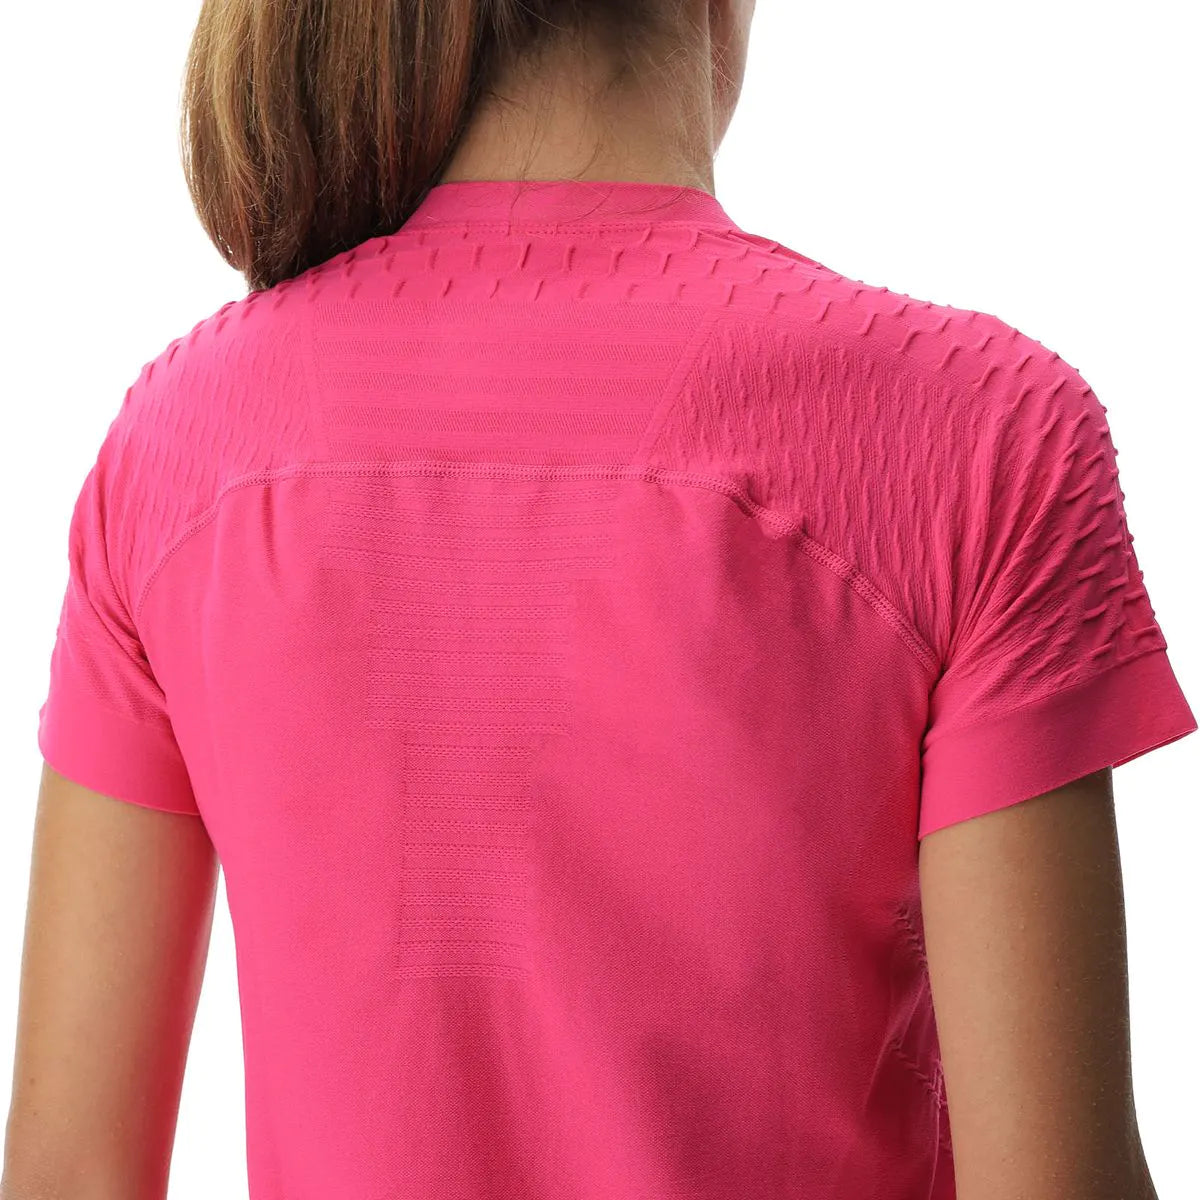 UYN Run Fit OW shirt - Pink Peacock (D)